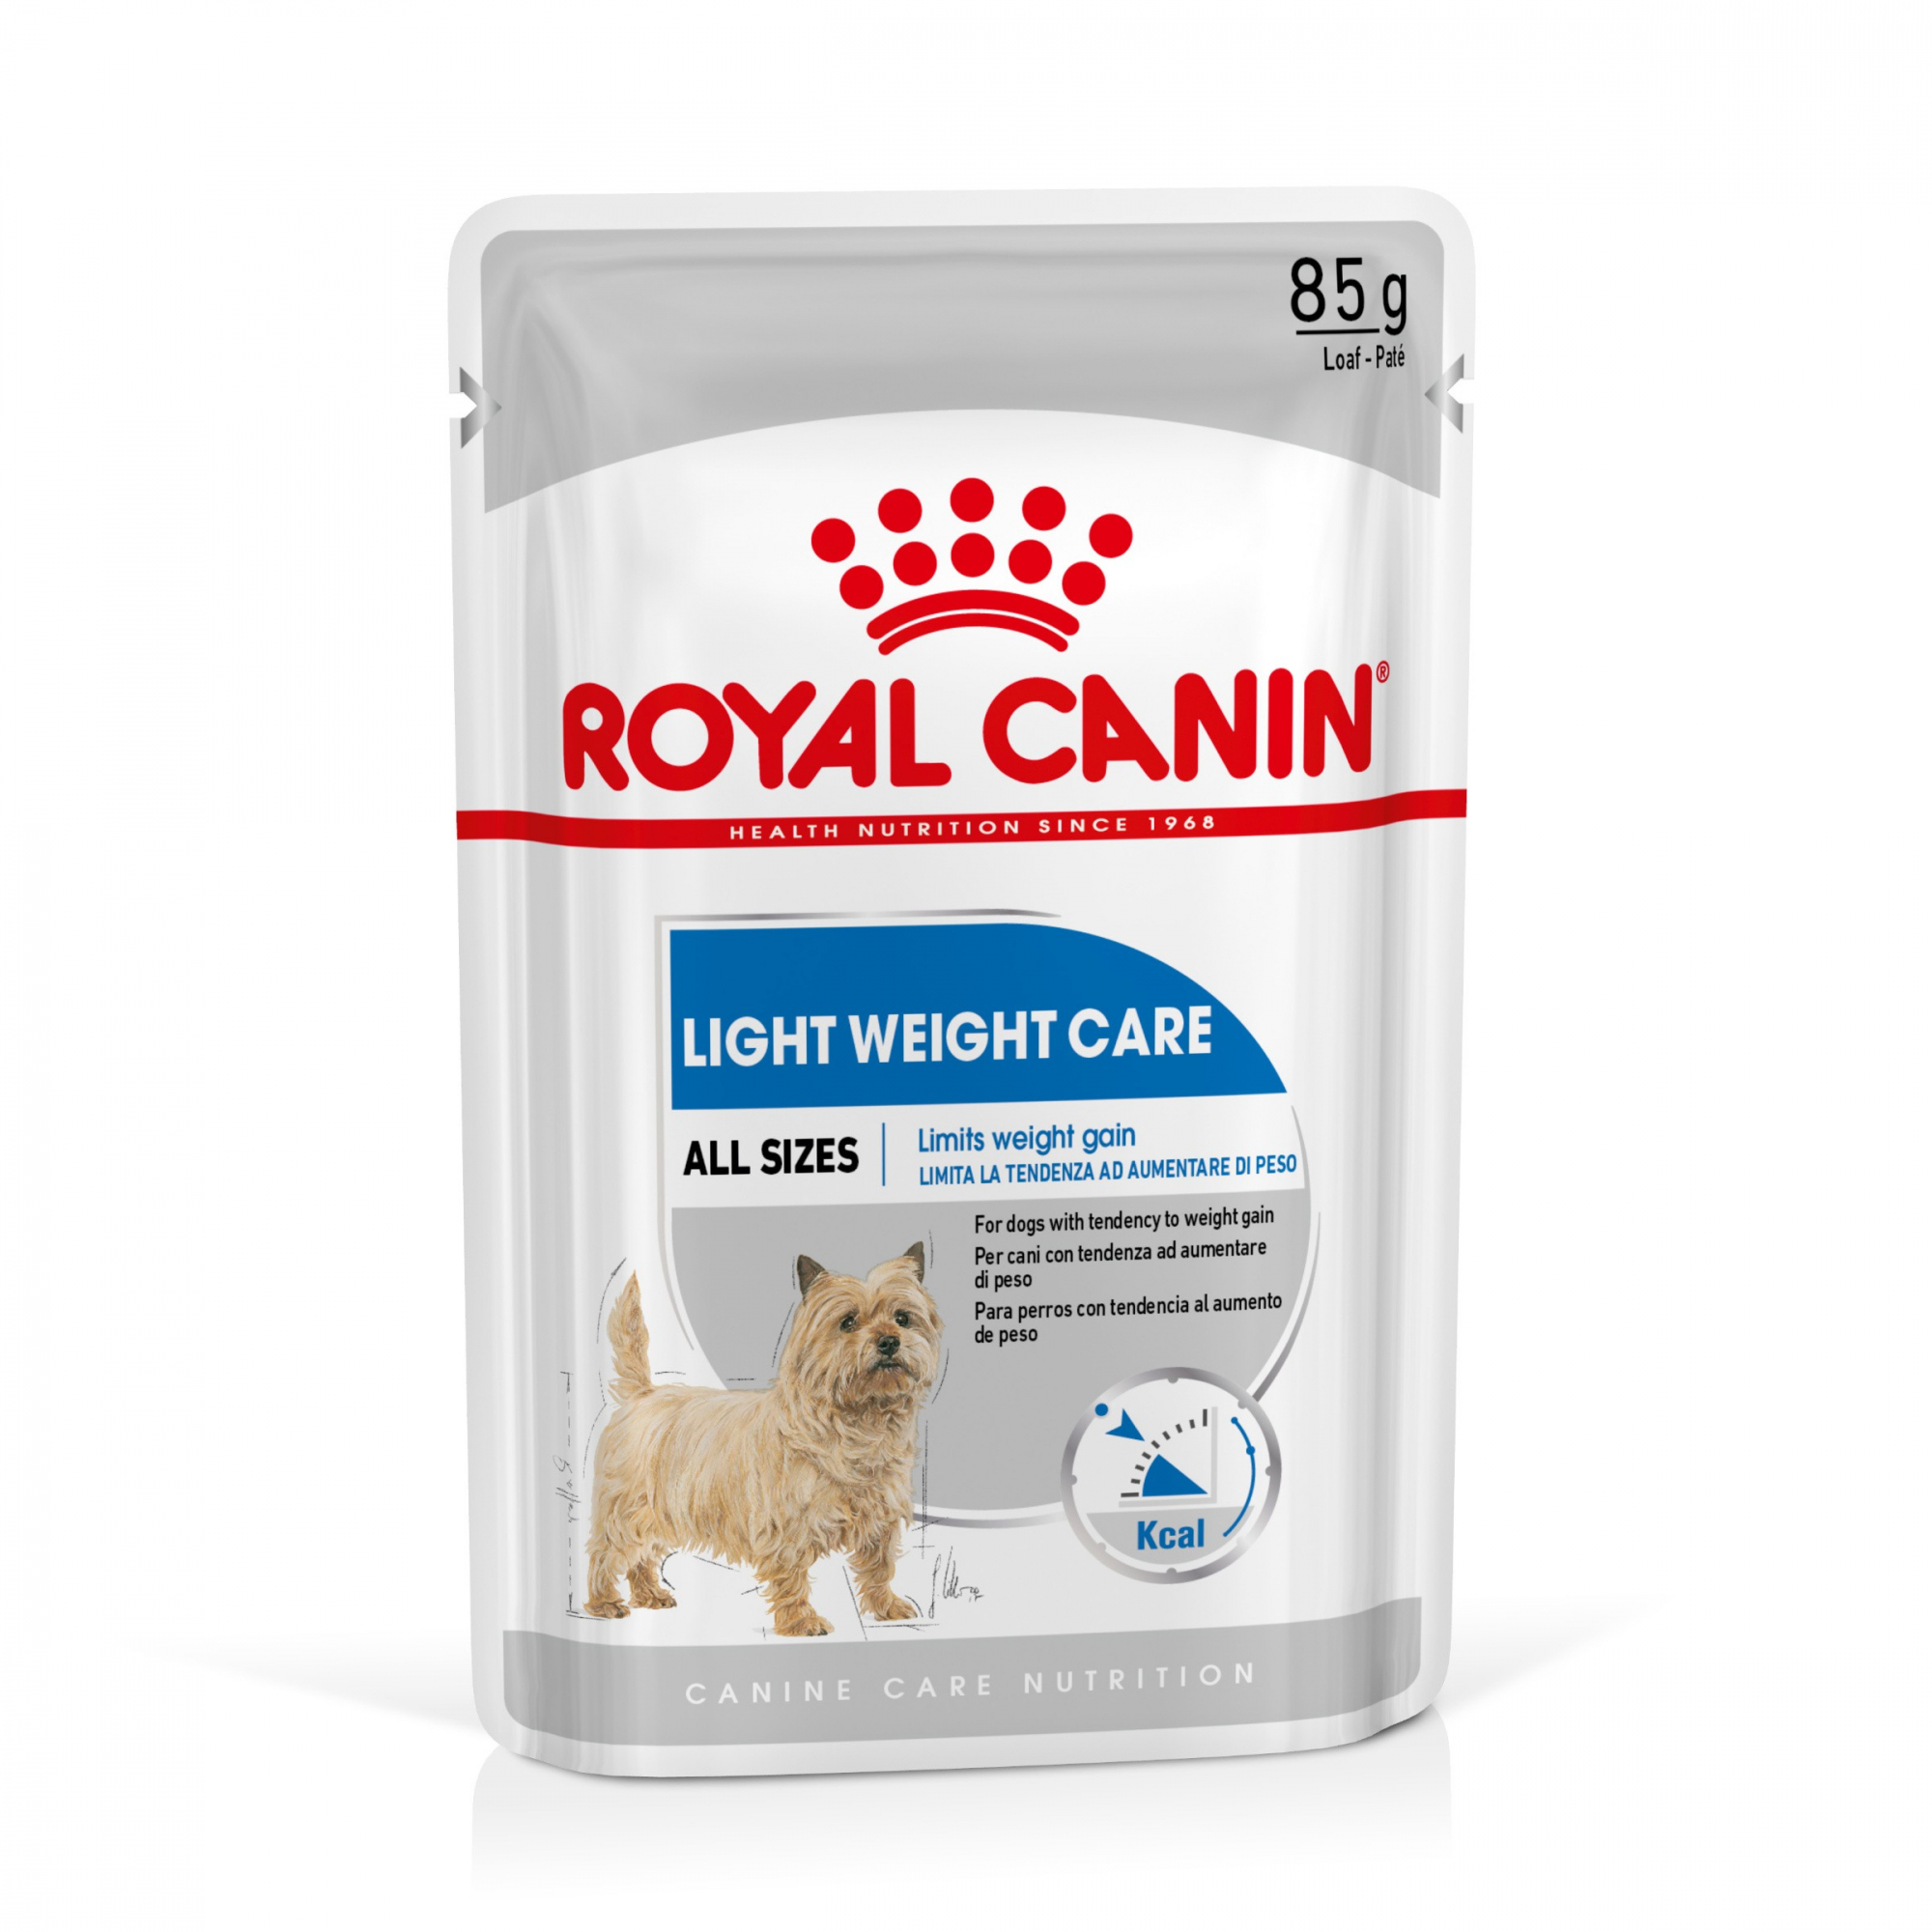 Royal Canin Light mousse